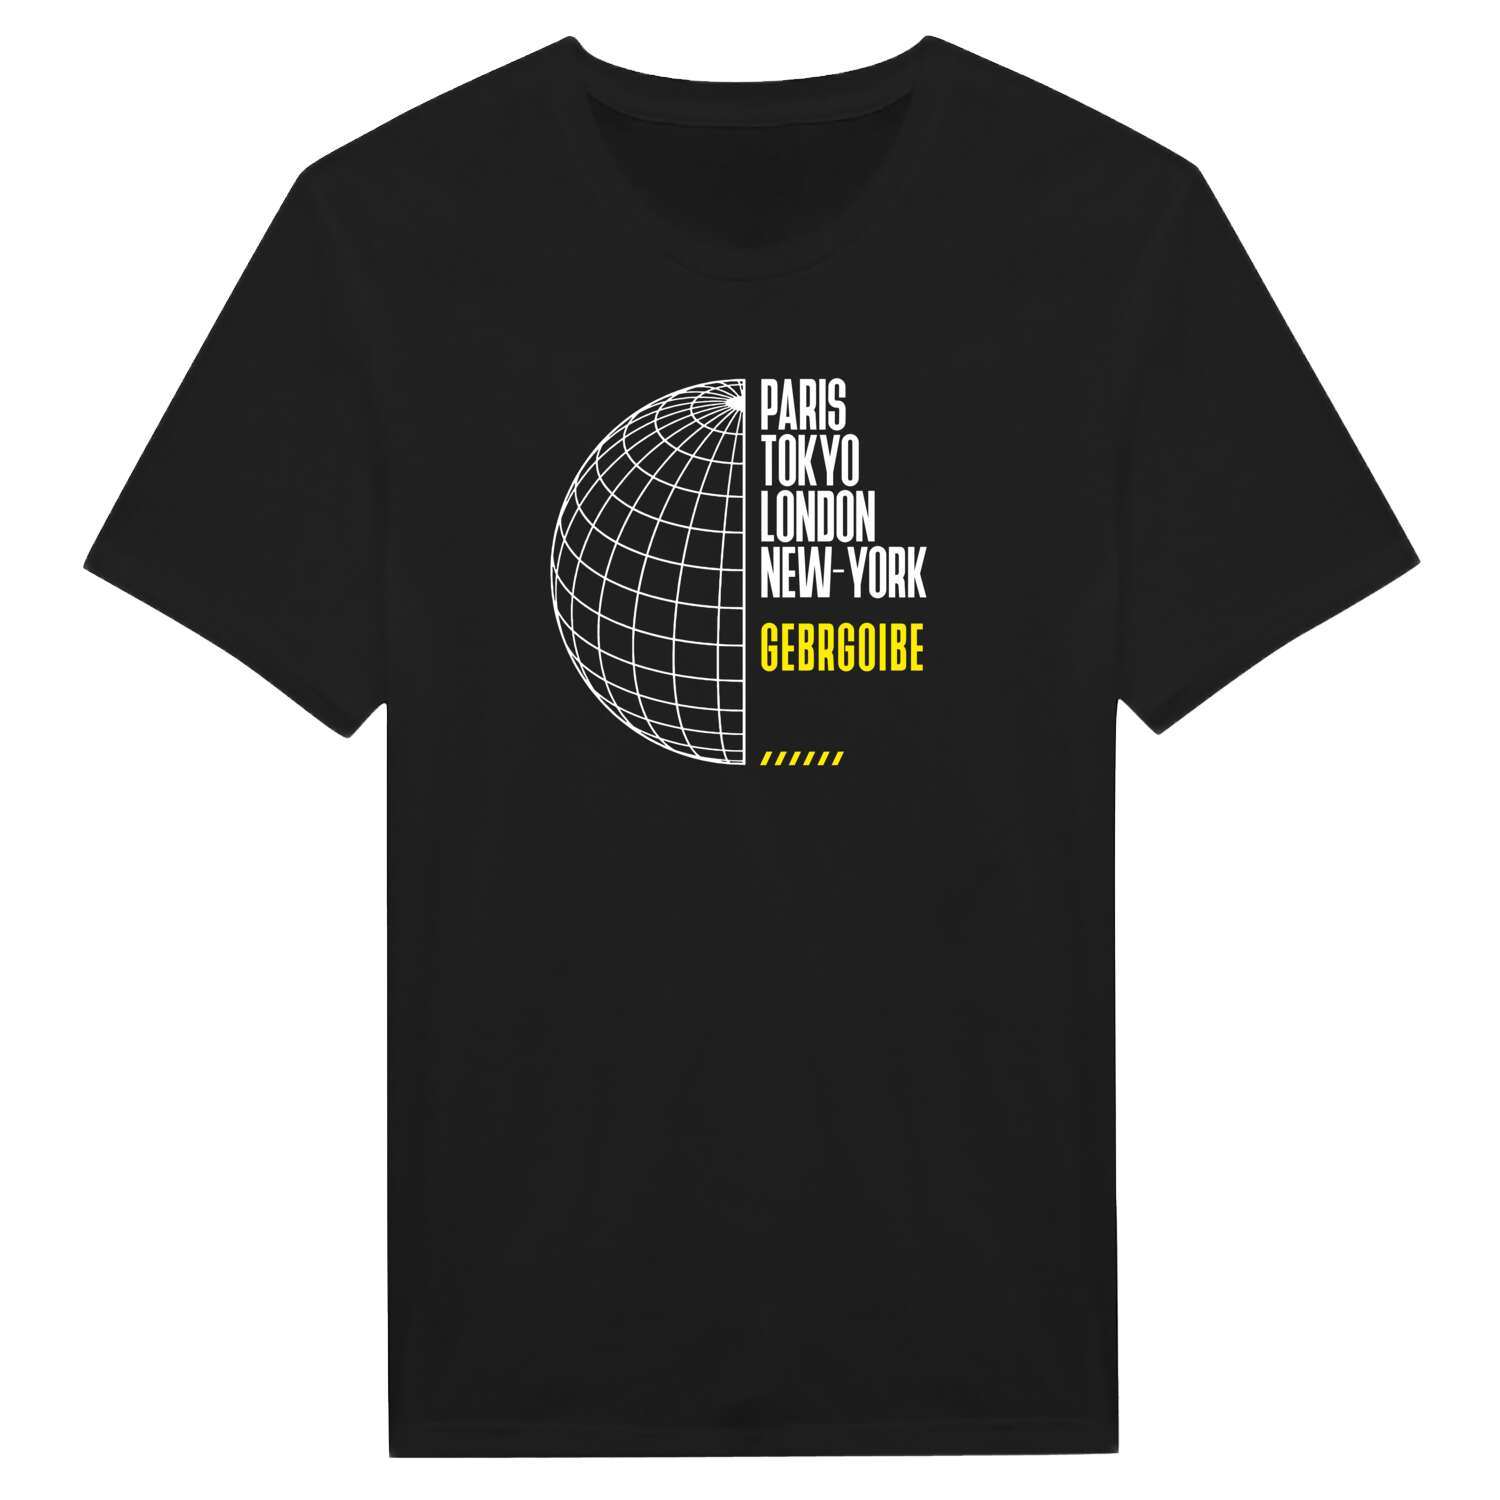 Gebrgoibe T-Shirt »Paris Tokyo London«